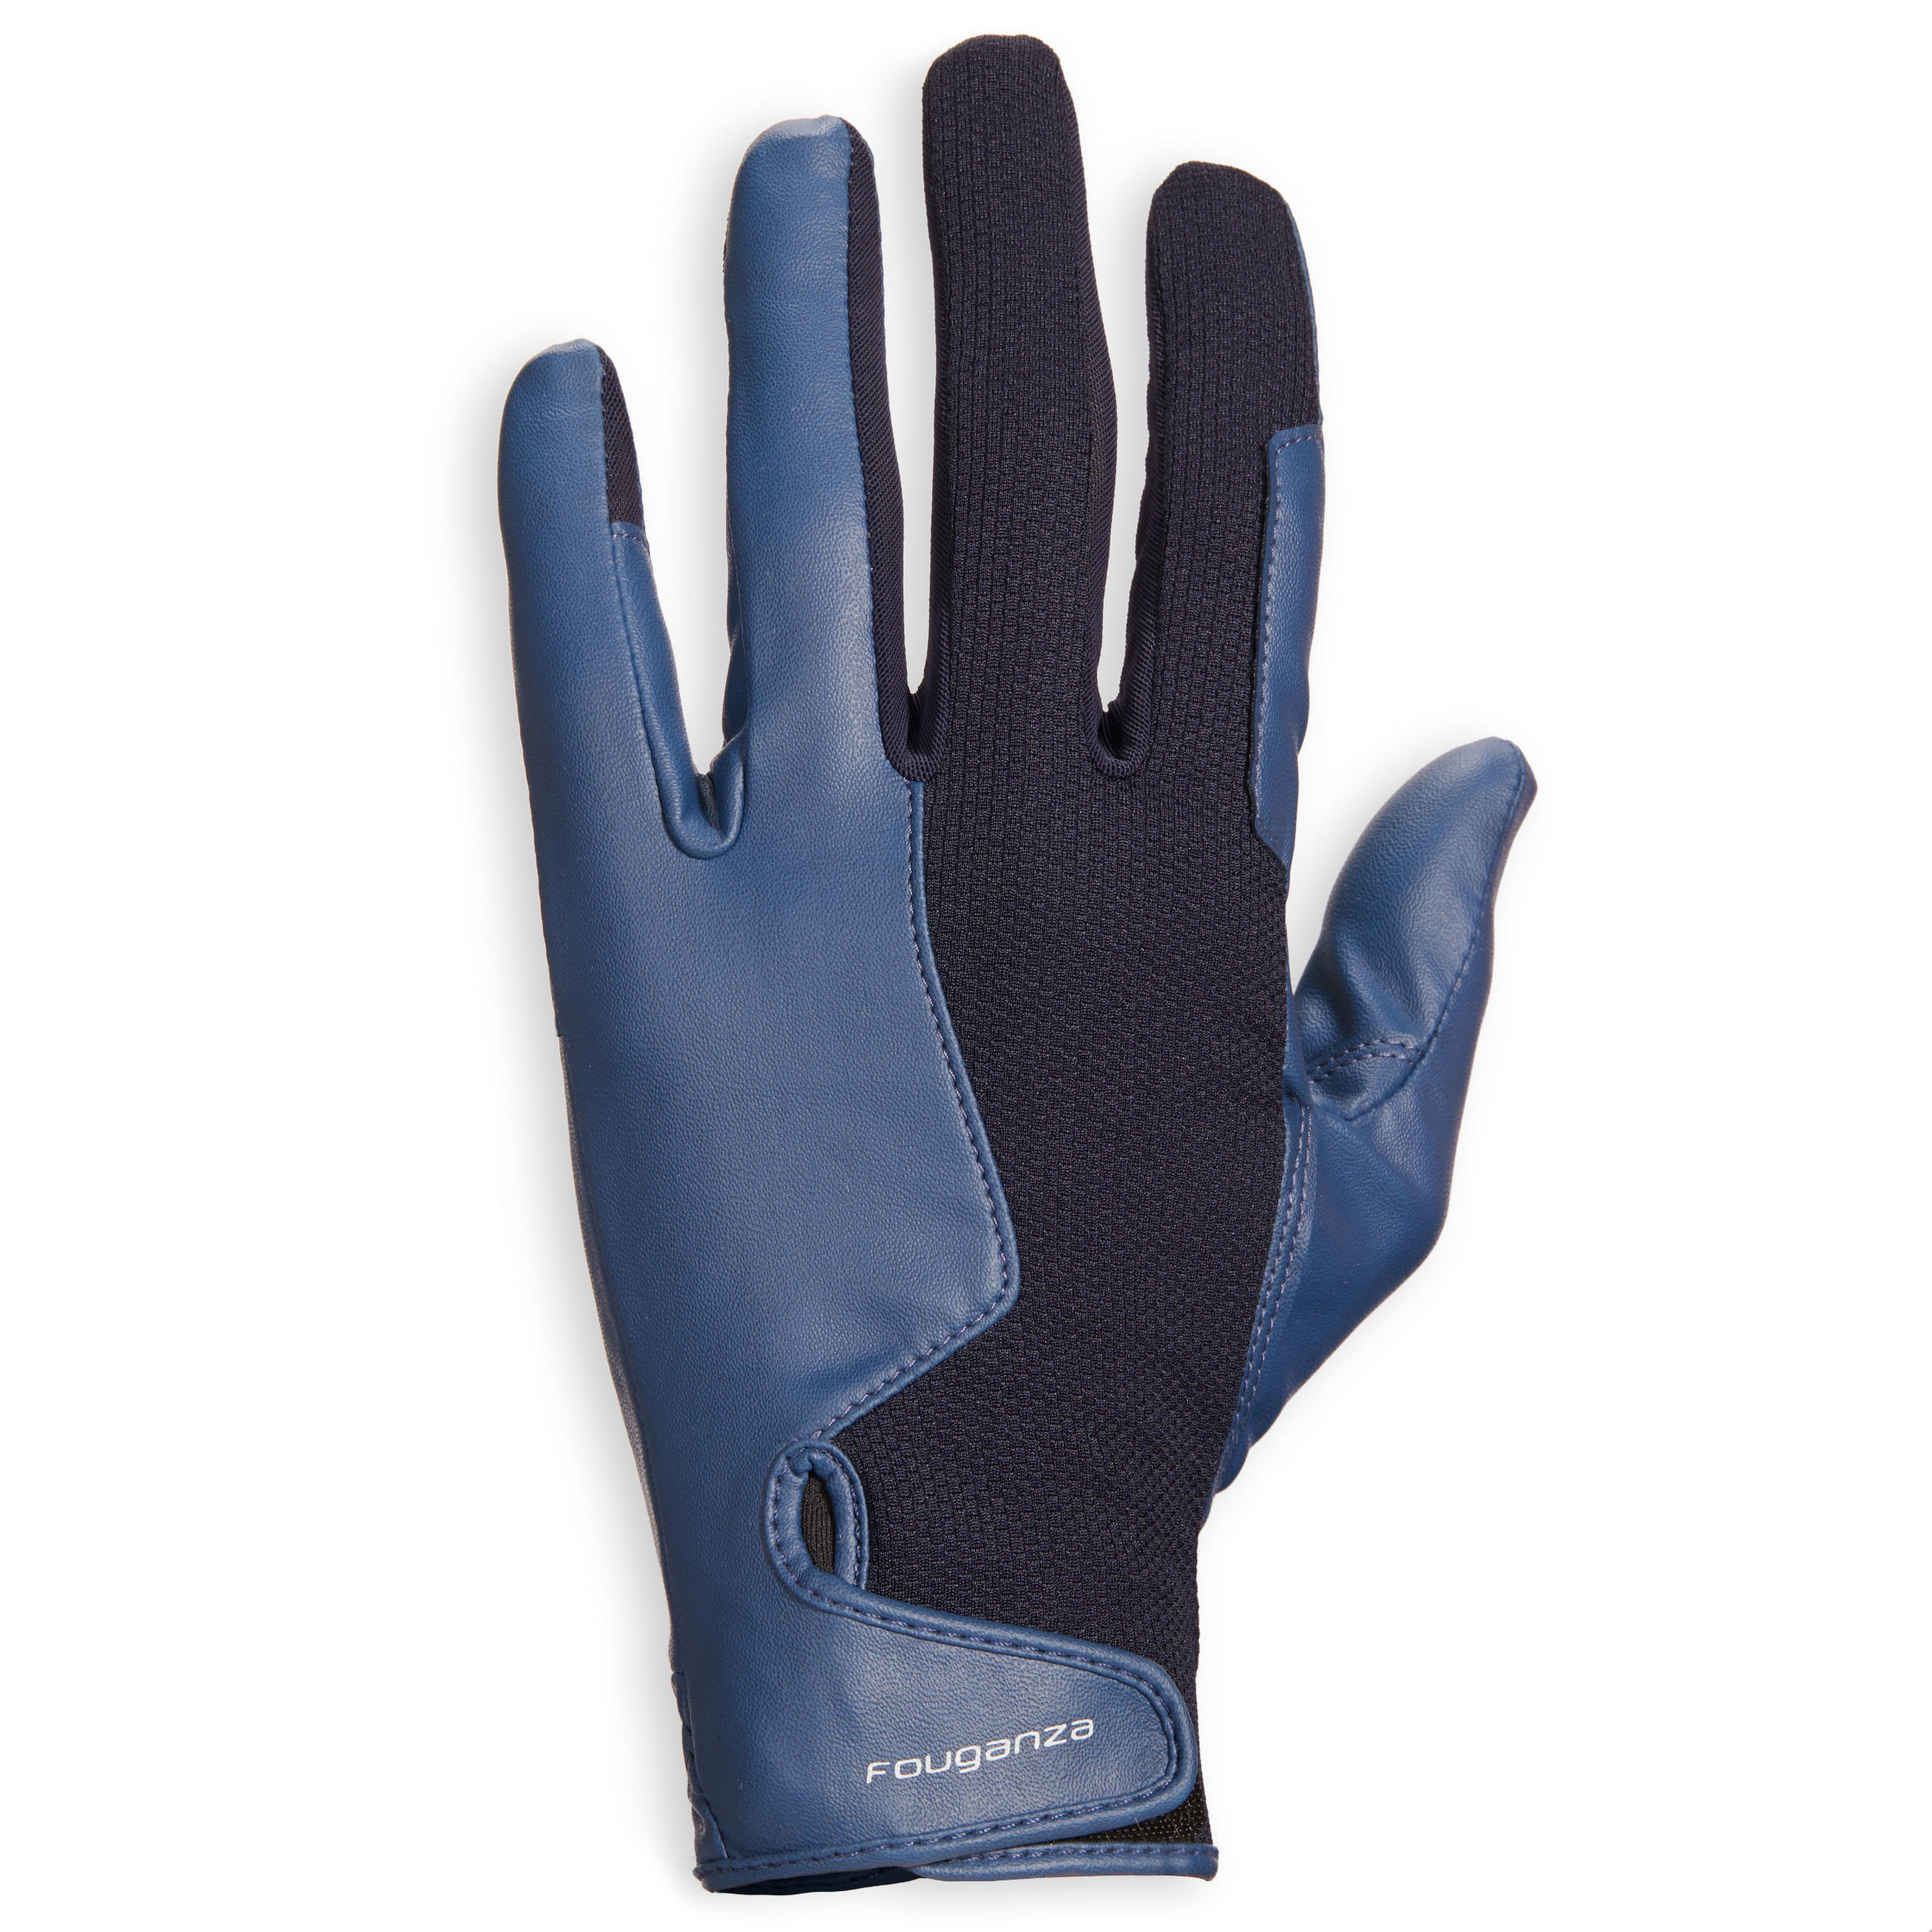 560 Horse Riding Gloves - Navy/Blue 1/7